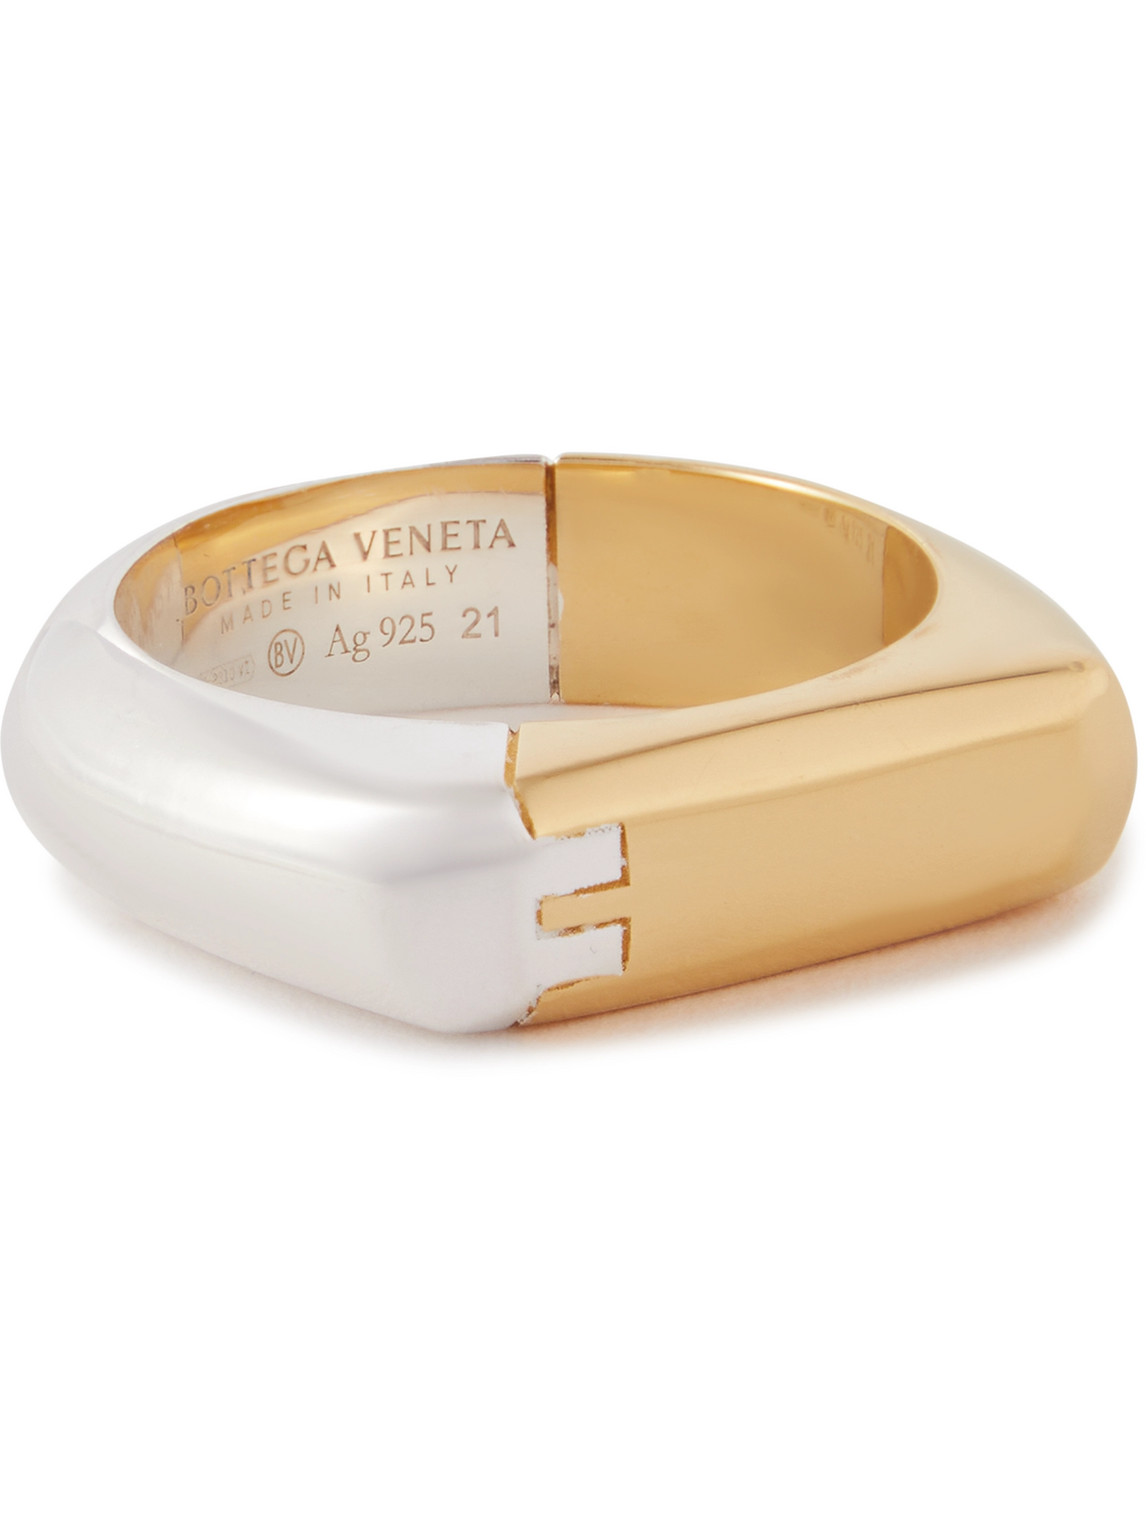 Bottega Veneta Gold-plated And Sterling Silver Ring